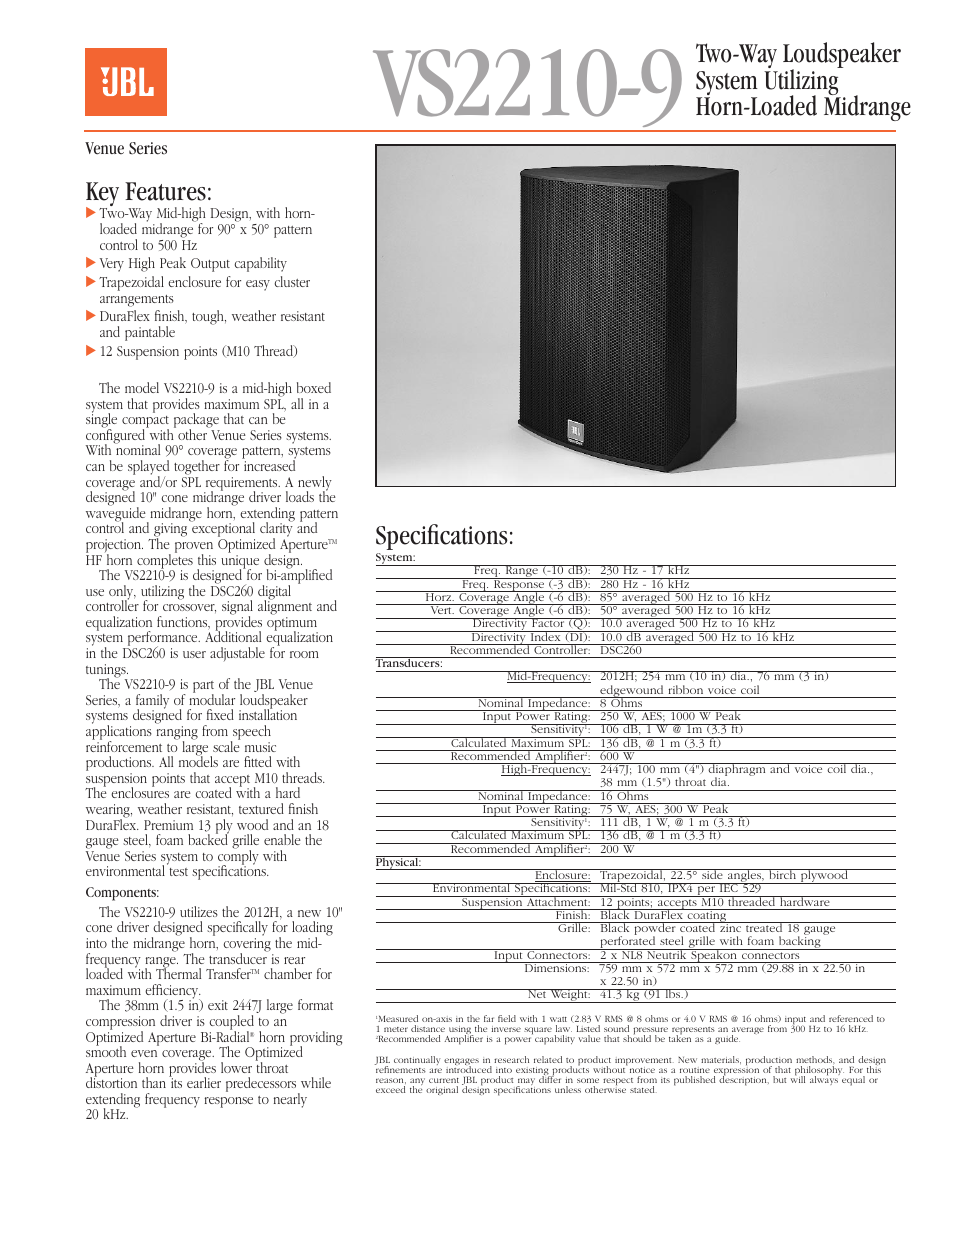 Harman-Kardon Two-Way Loudspeaker System Utilizing Horn-Loaded Midrange VS2210-9 User Manual | 4 pages